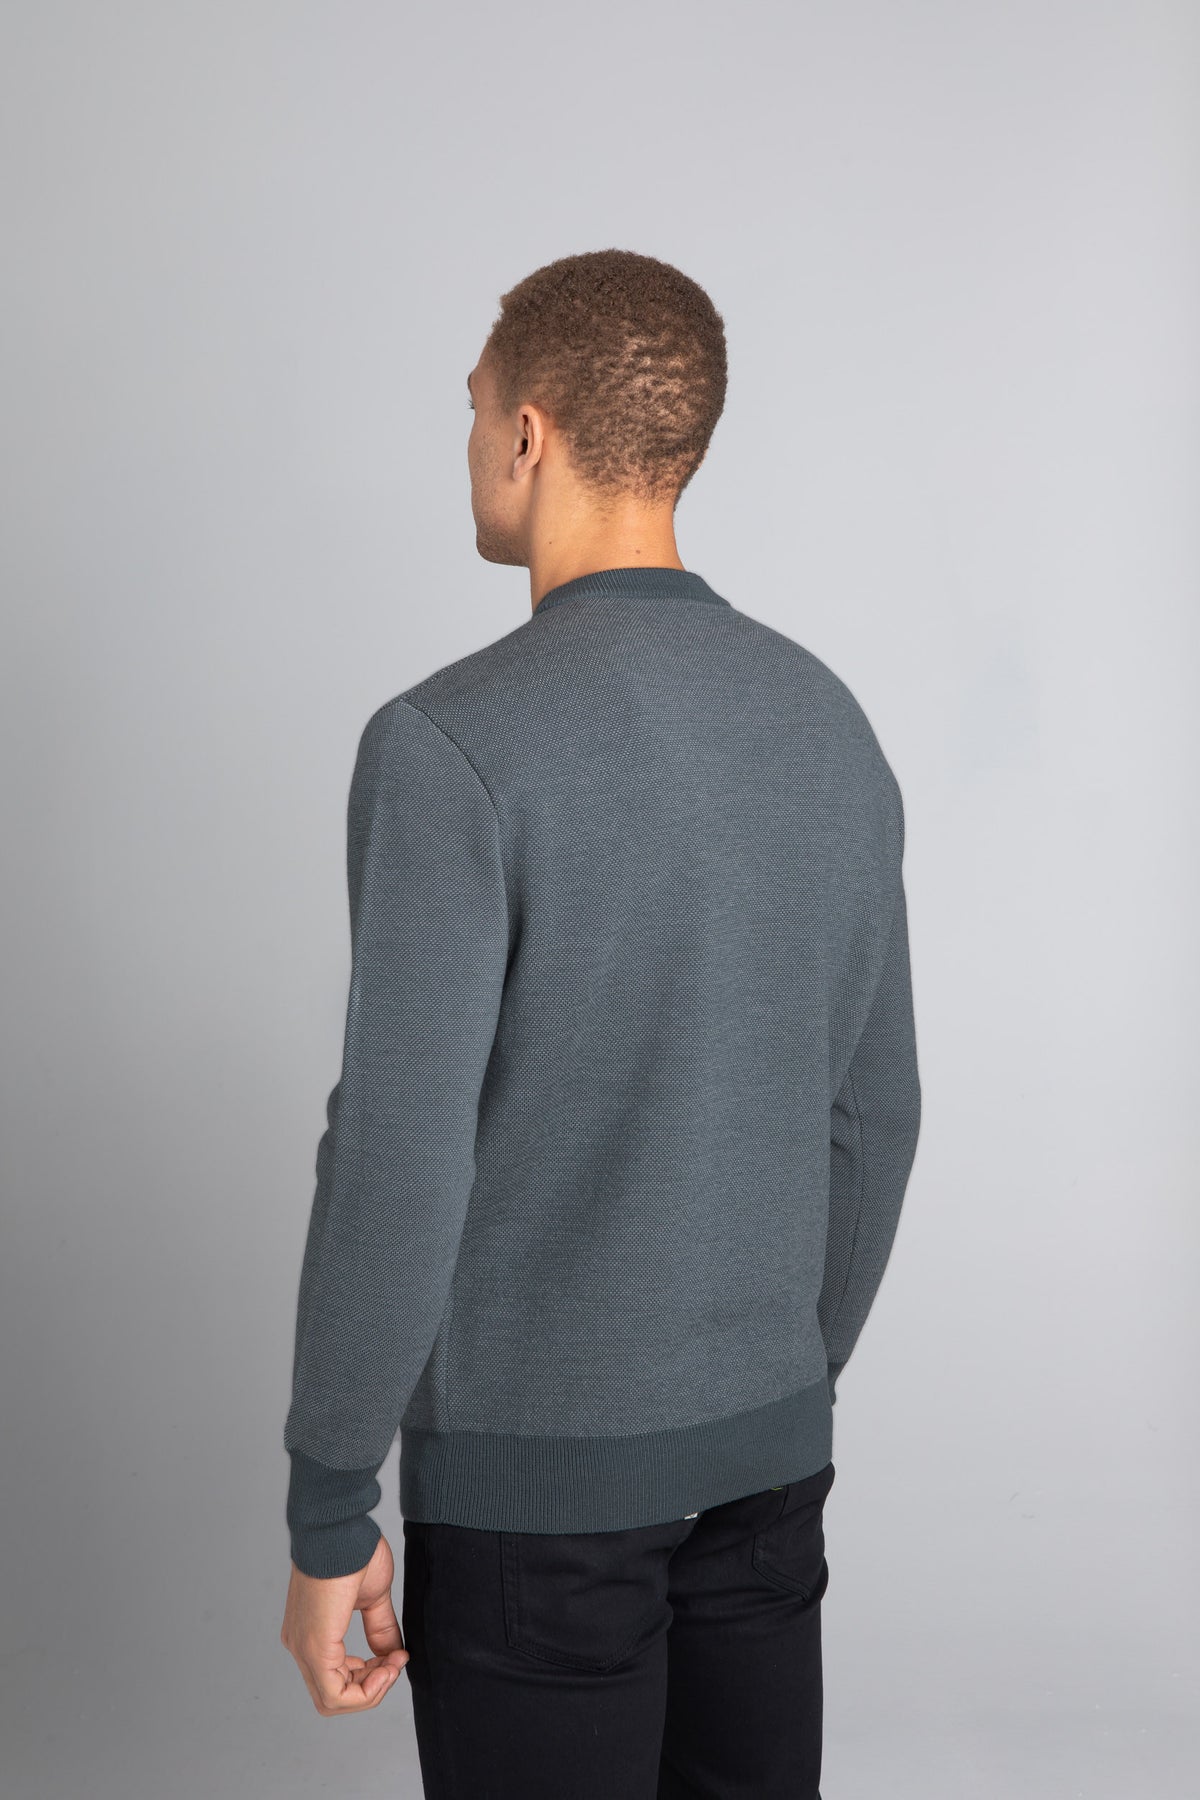 Model Wearing The Merino wool jaquard sweater Navy Grey, back - Unborn